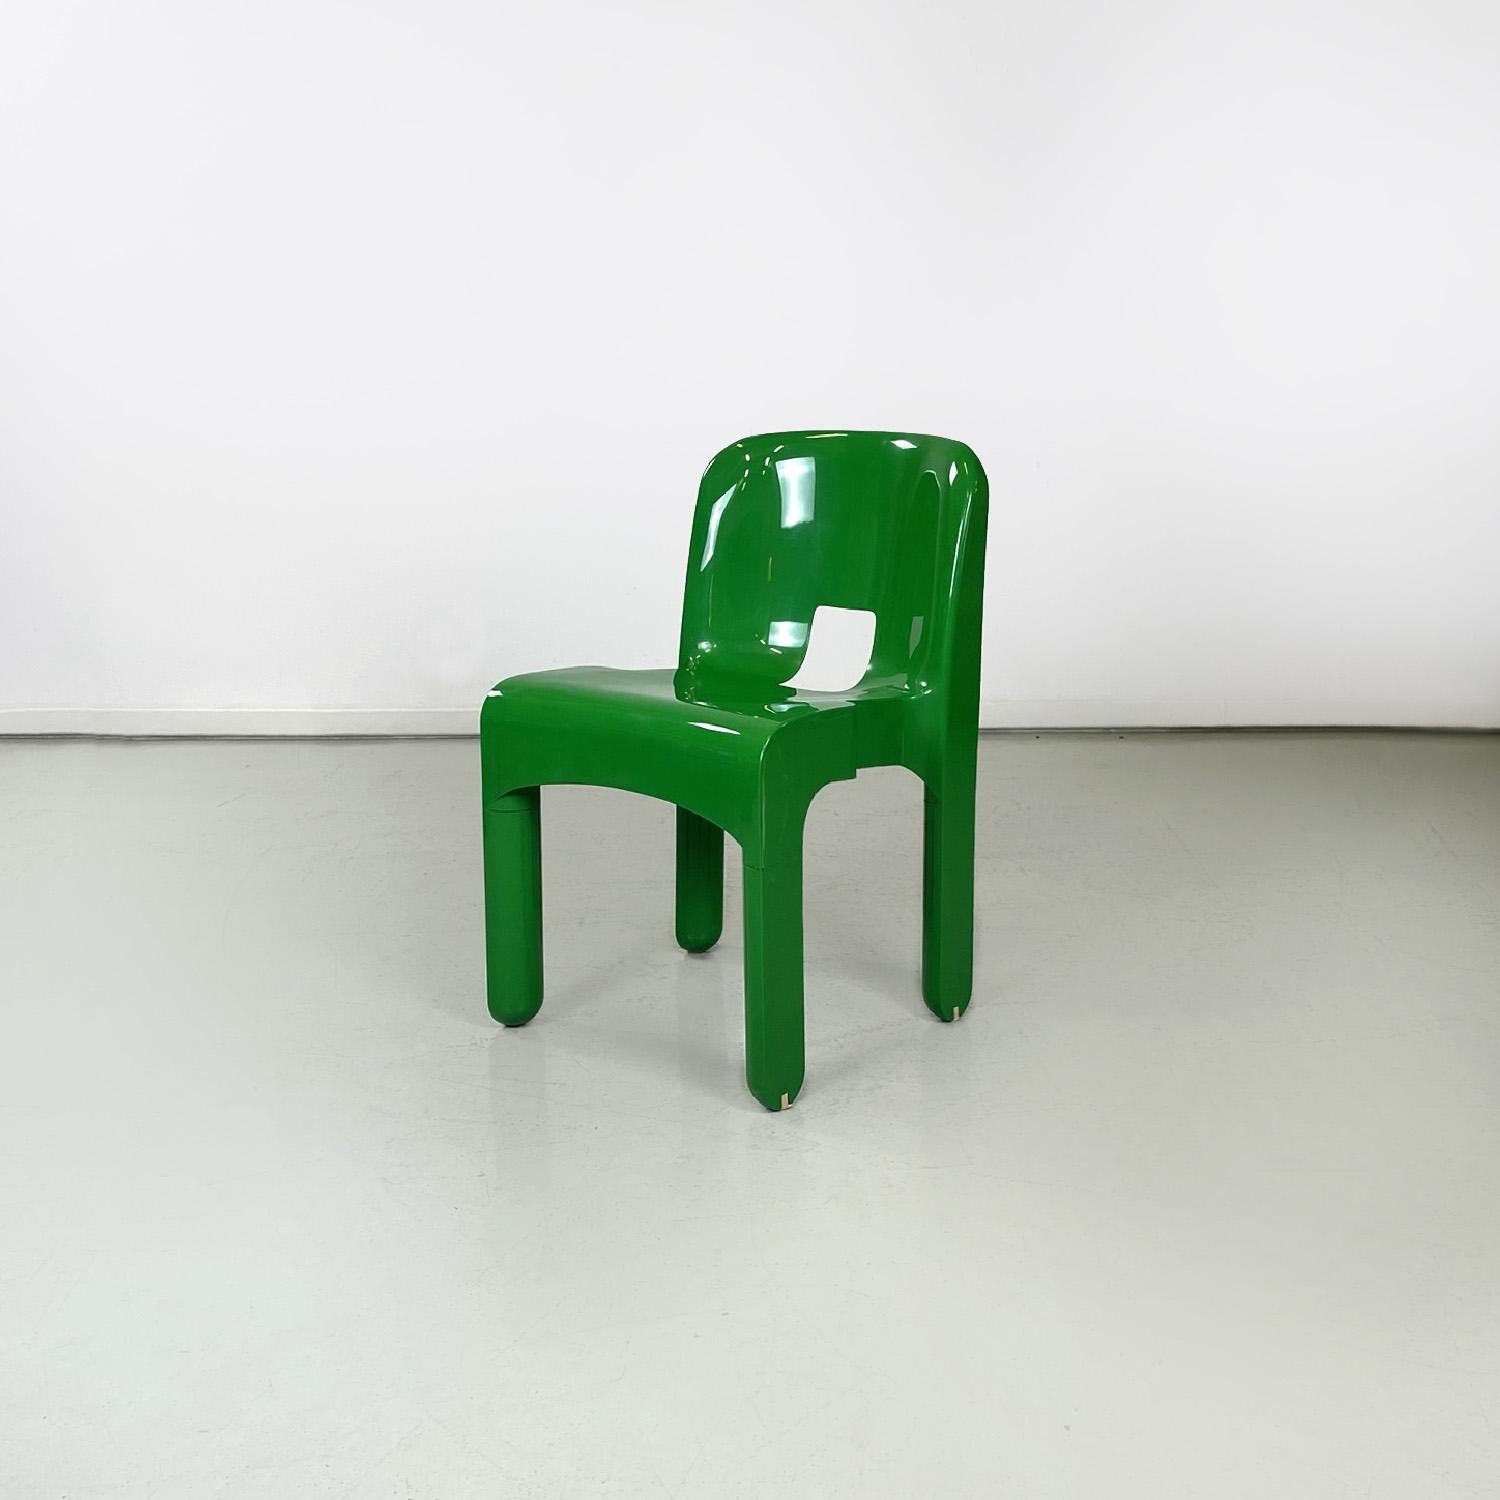 Modern Italian modern green Chairs 4868 Universal Chair by Joe Colombo Kartell, 1970s For Sale